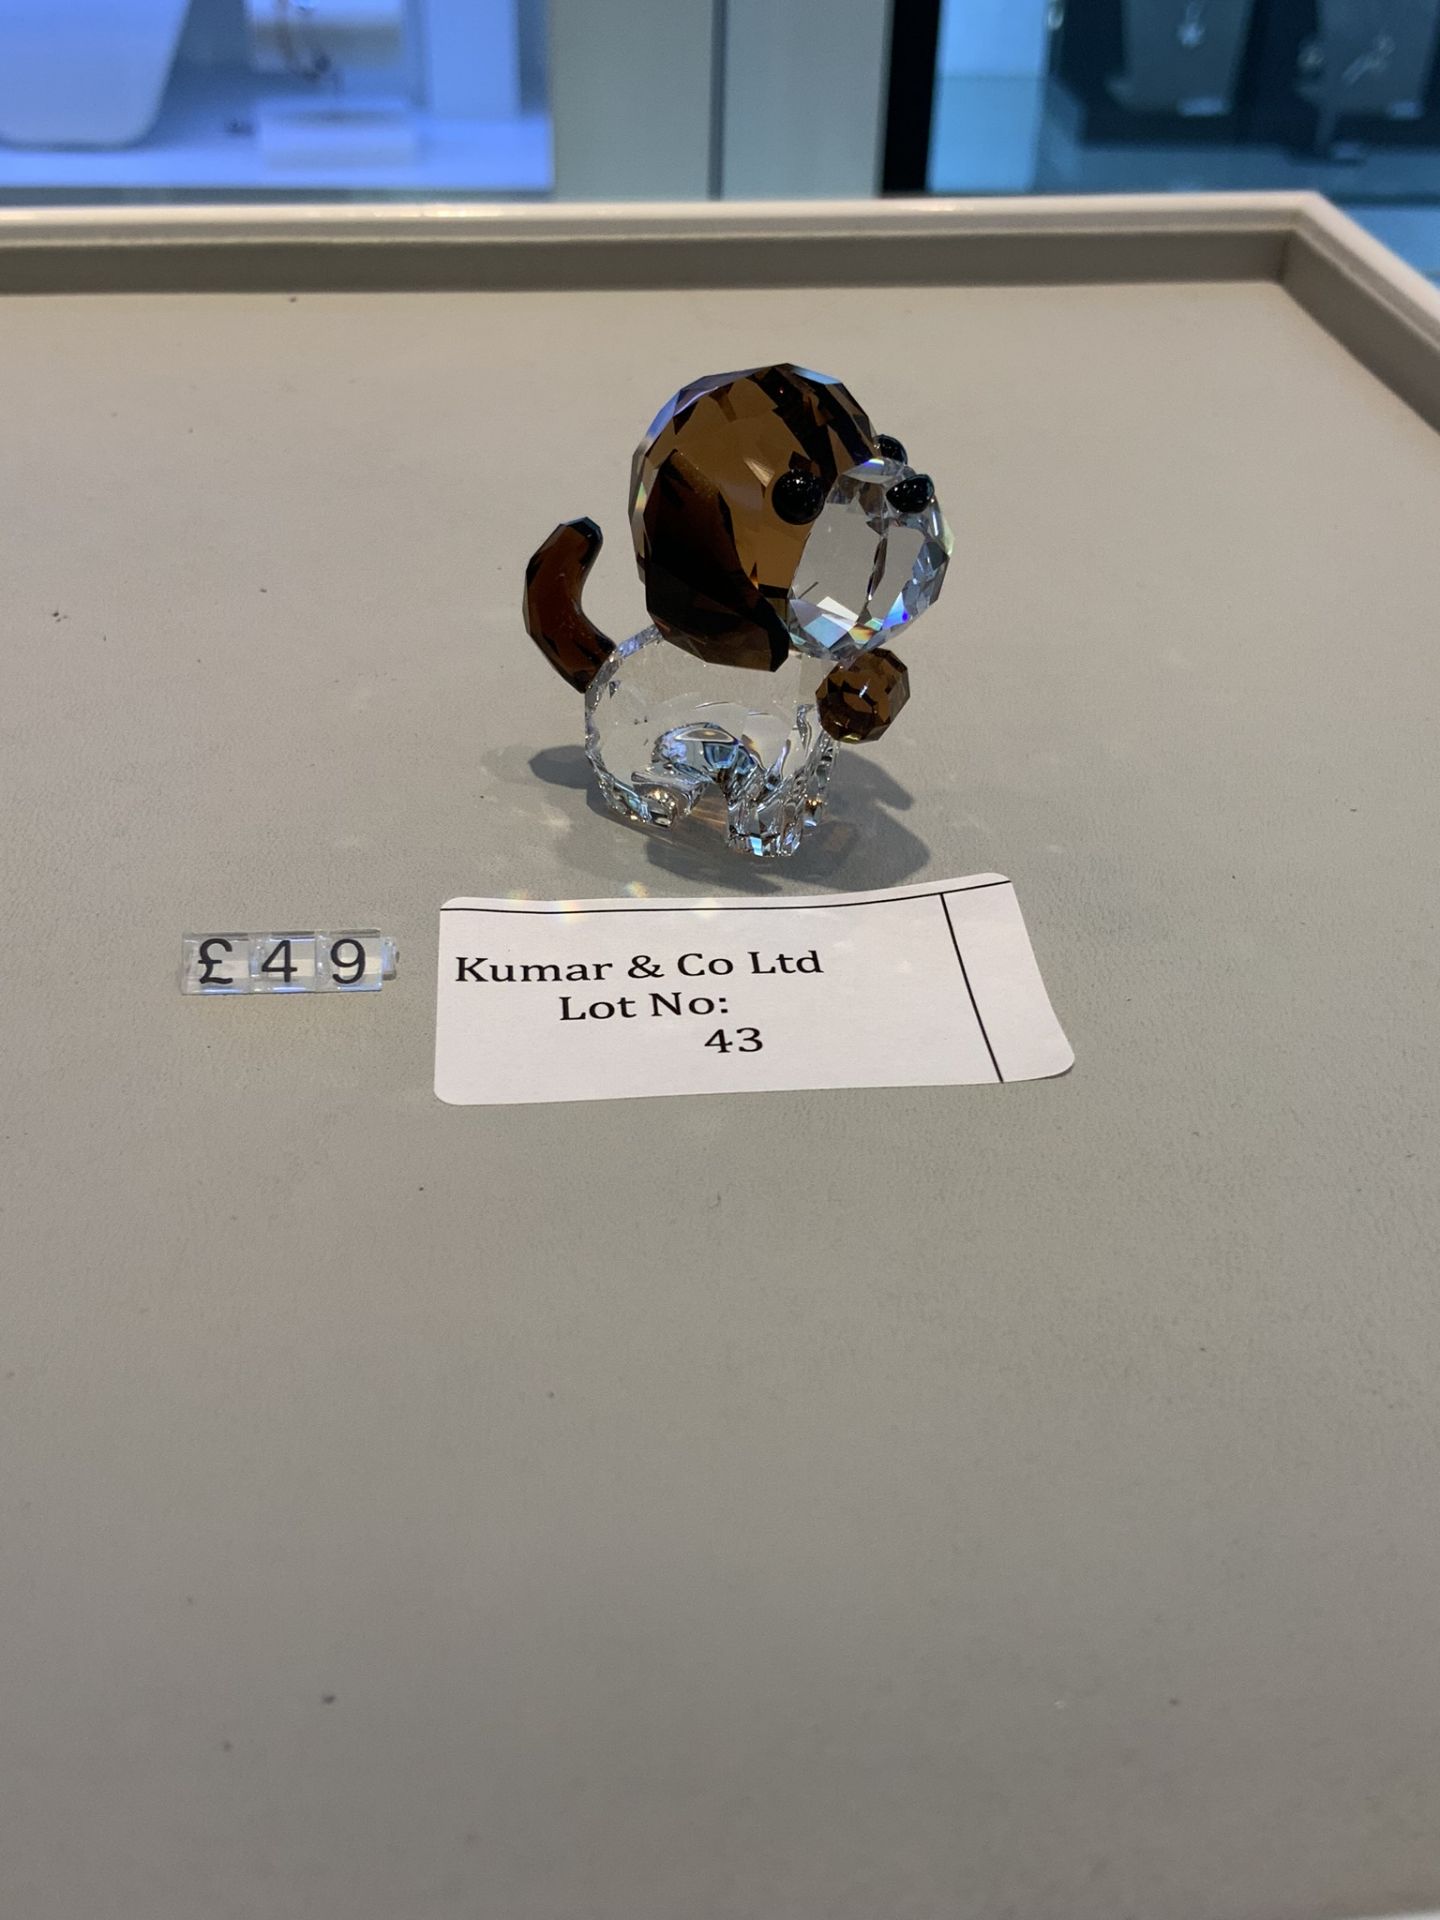 Swarovski Crystal Puppy - Bernie the Saint Bernard Figurine RRP £49 - Image 2 of 4